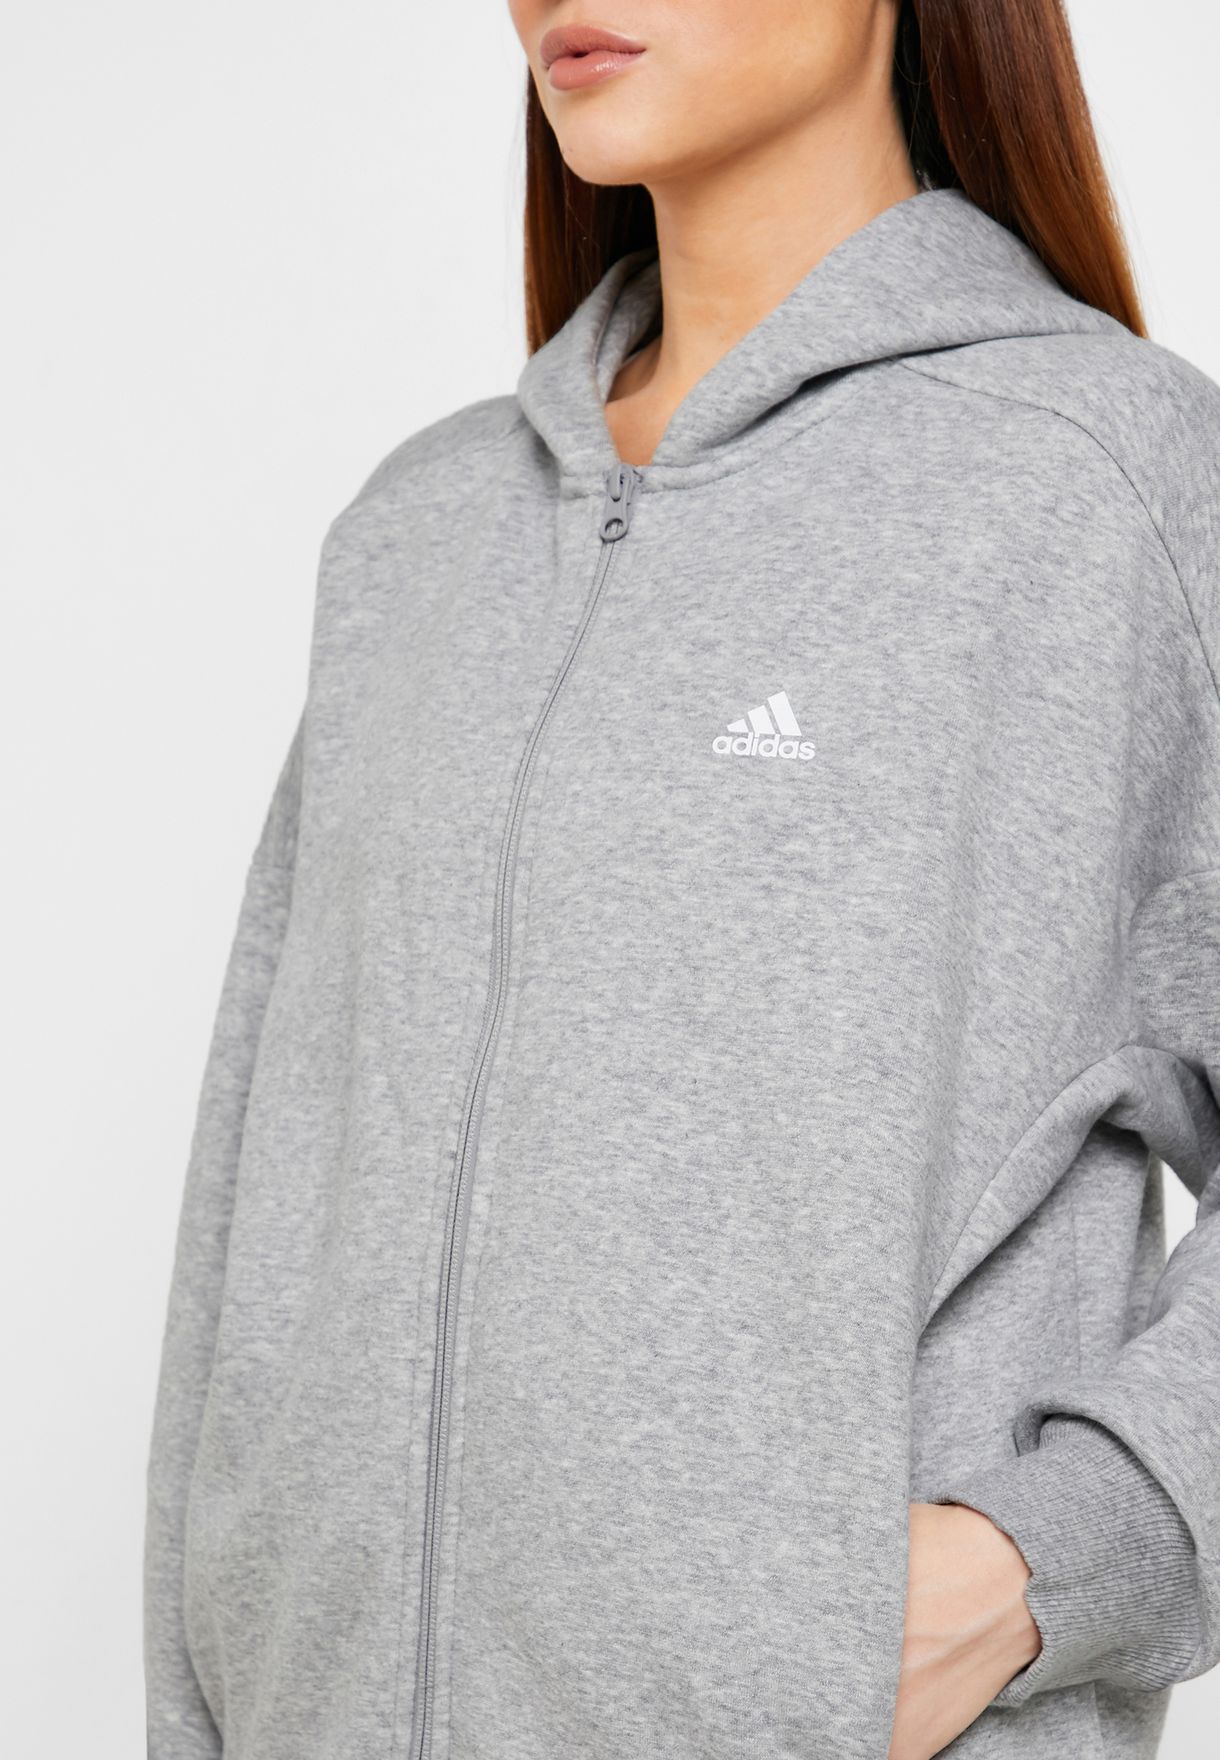 adidas s2s pullover hoodie women's